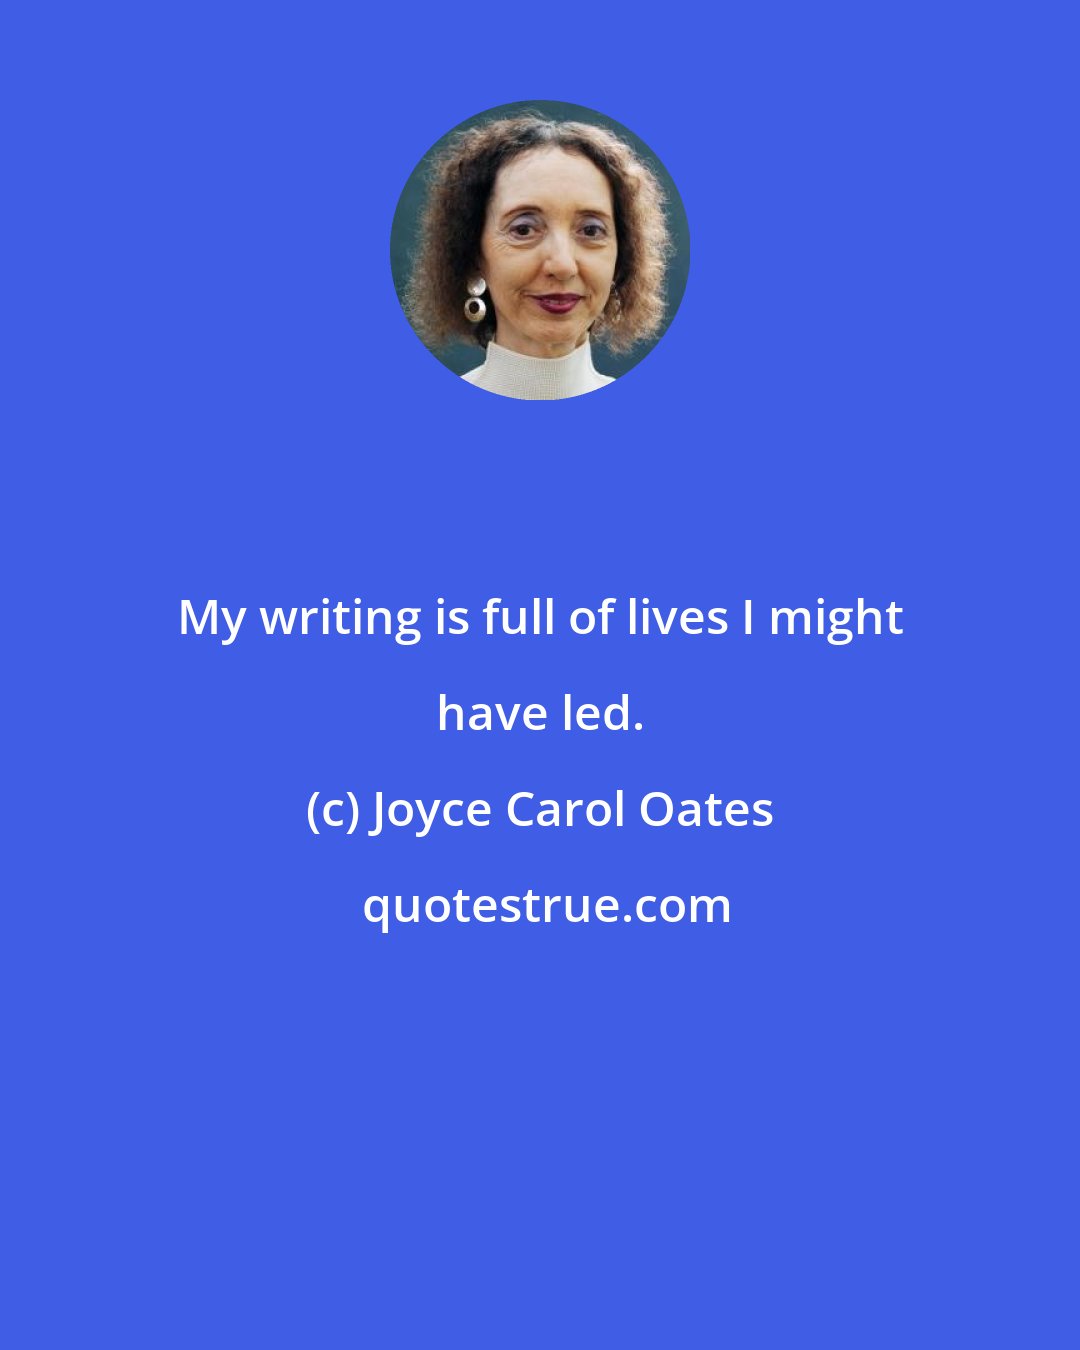 Joyce Carol Oates: My writing is full of lives I might have led.